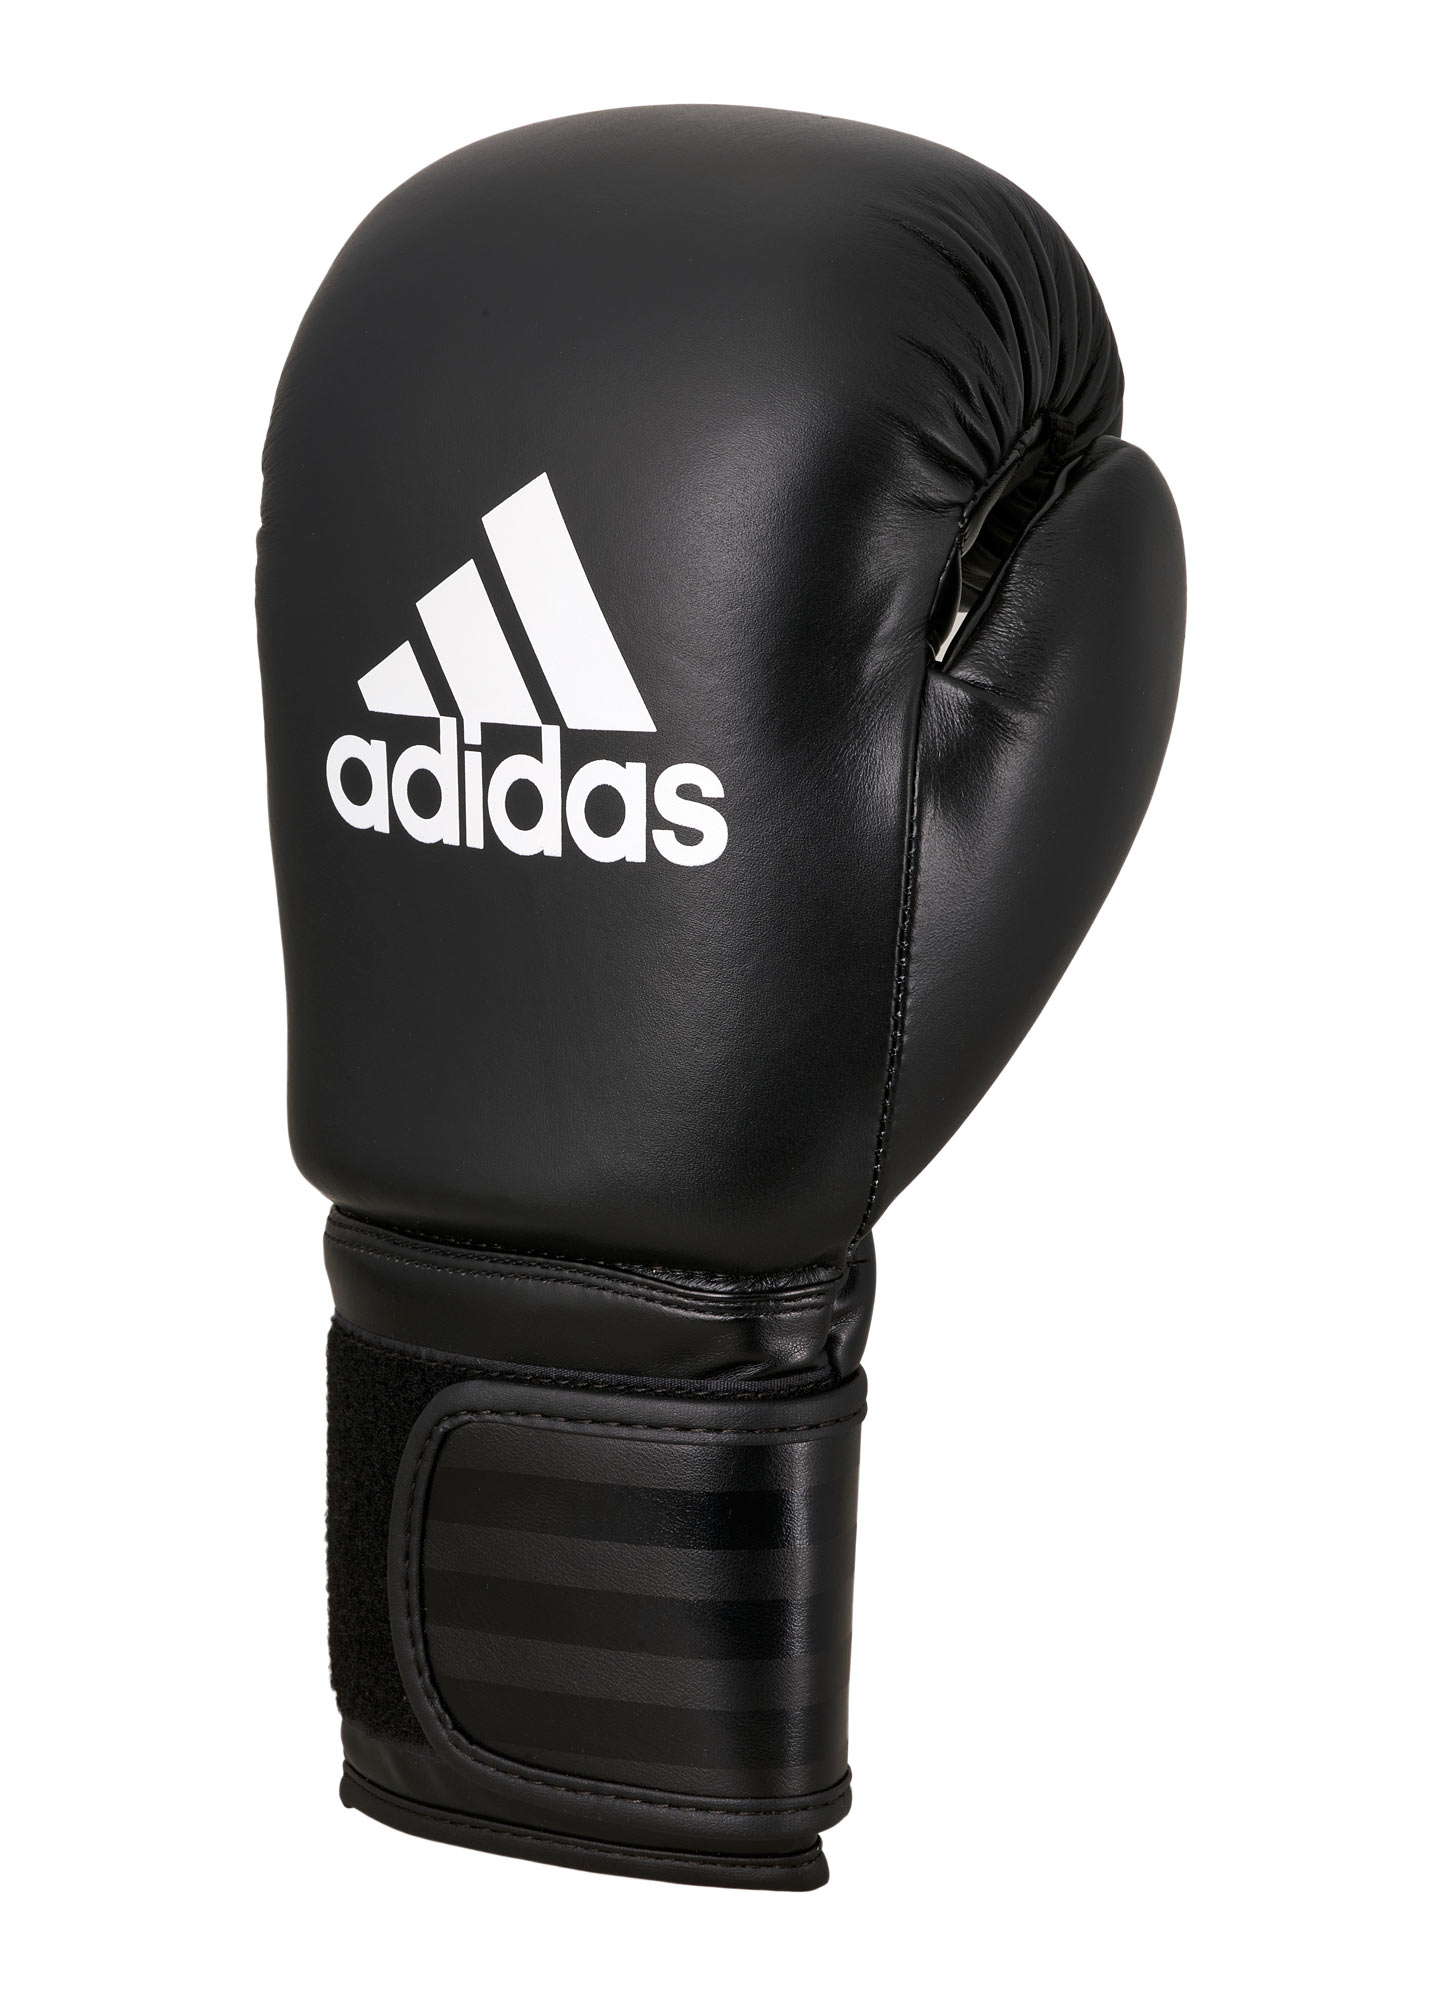 | KAMPFHELDEN Performer ADIBC01 Boxhandschuhe schwarz Adidas